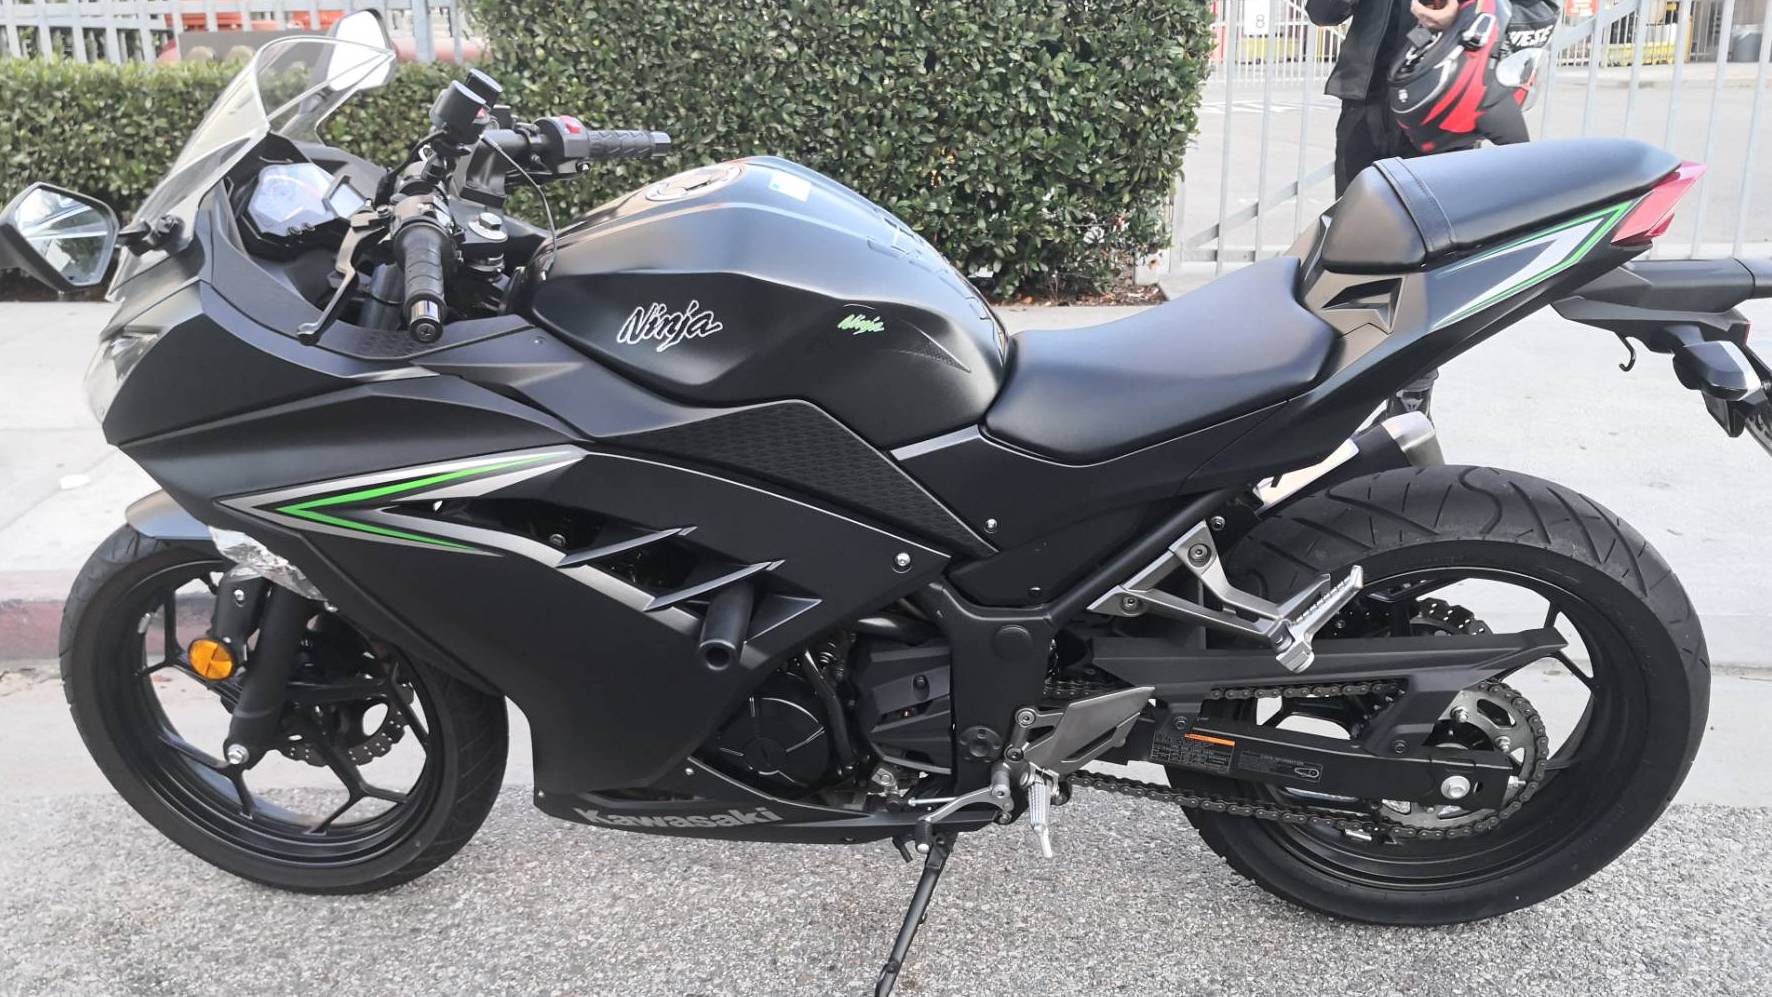 Kawasaki Ninja 300 ABS for rent near Los Angeles, CA | Riders Share